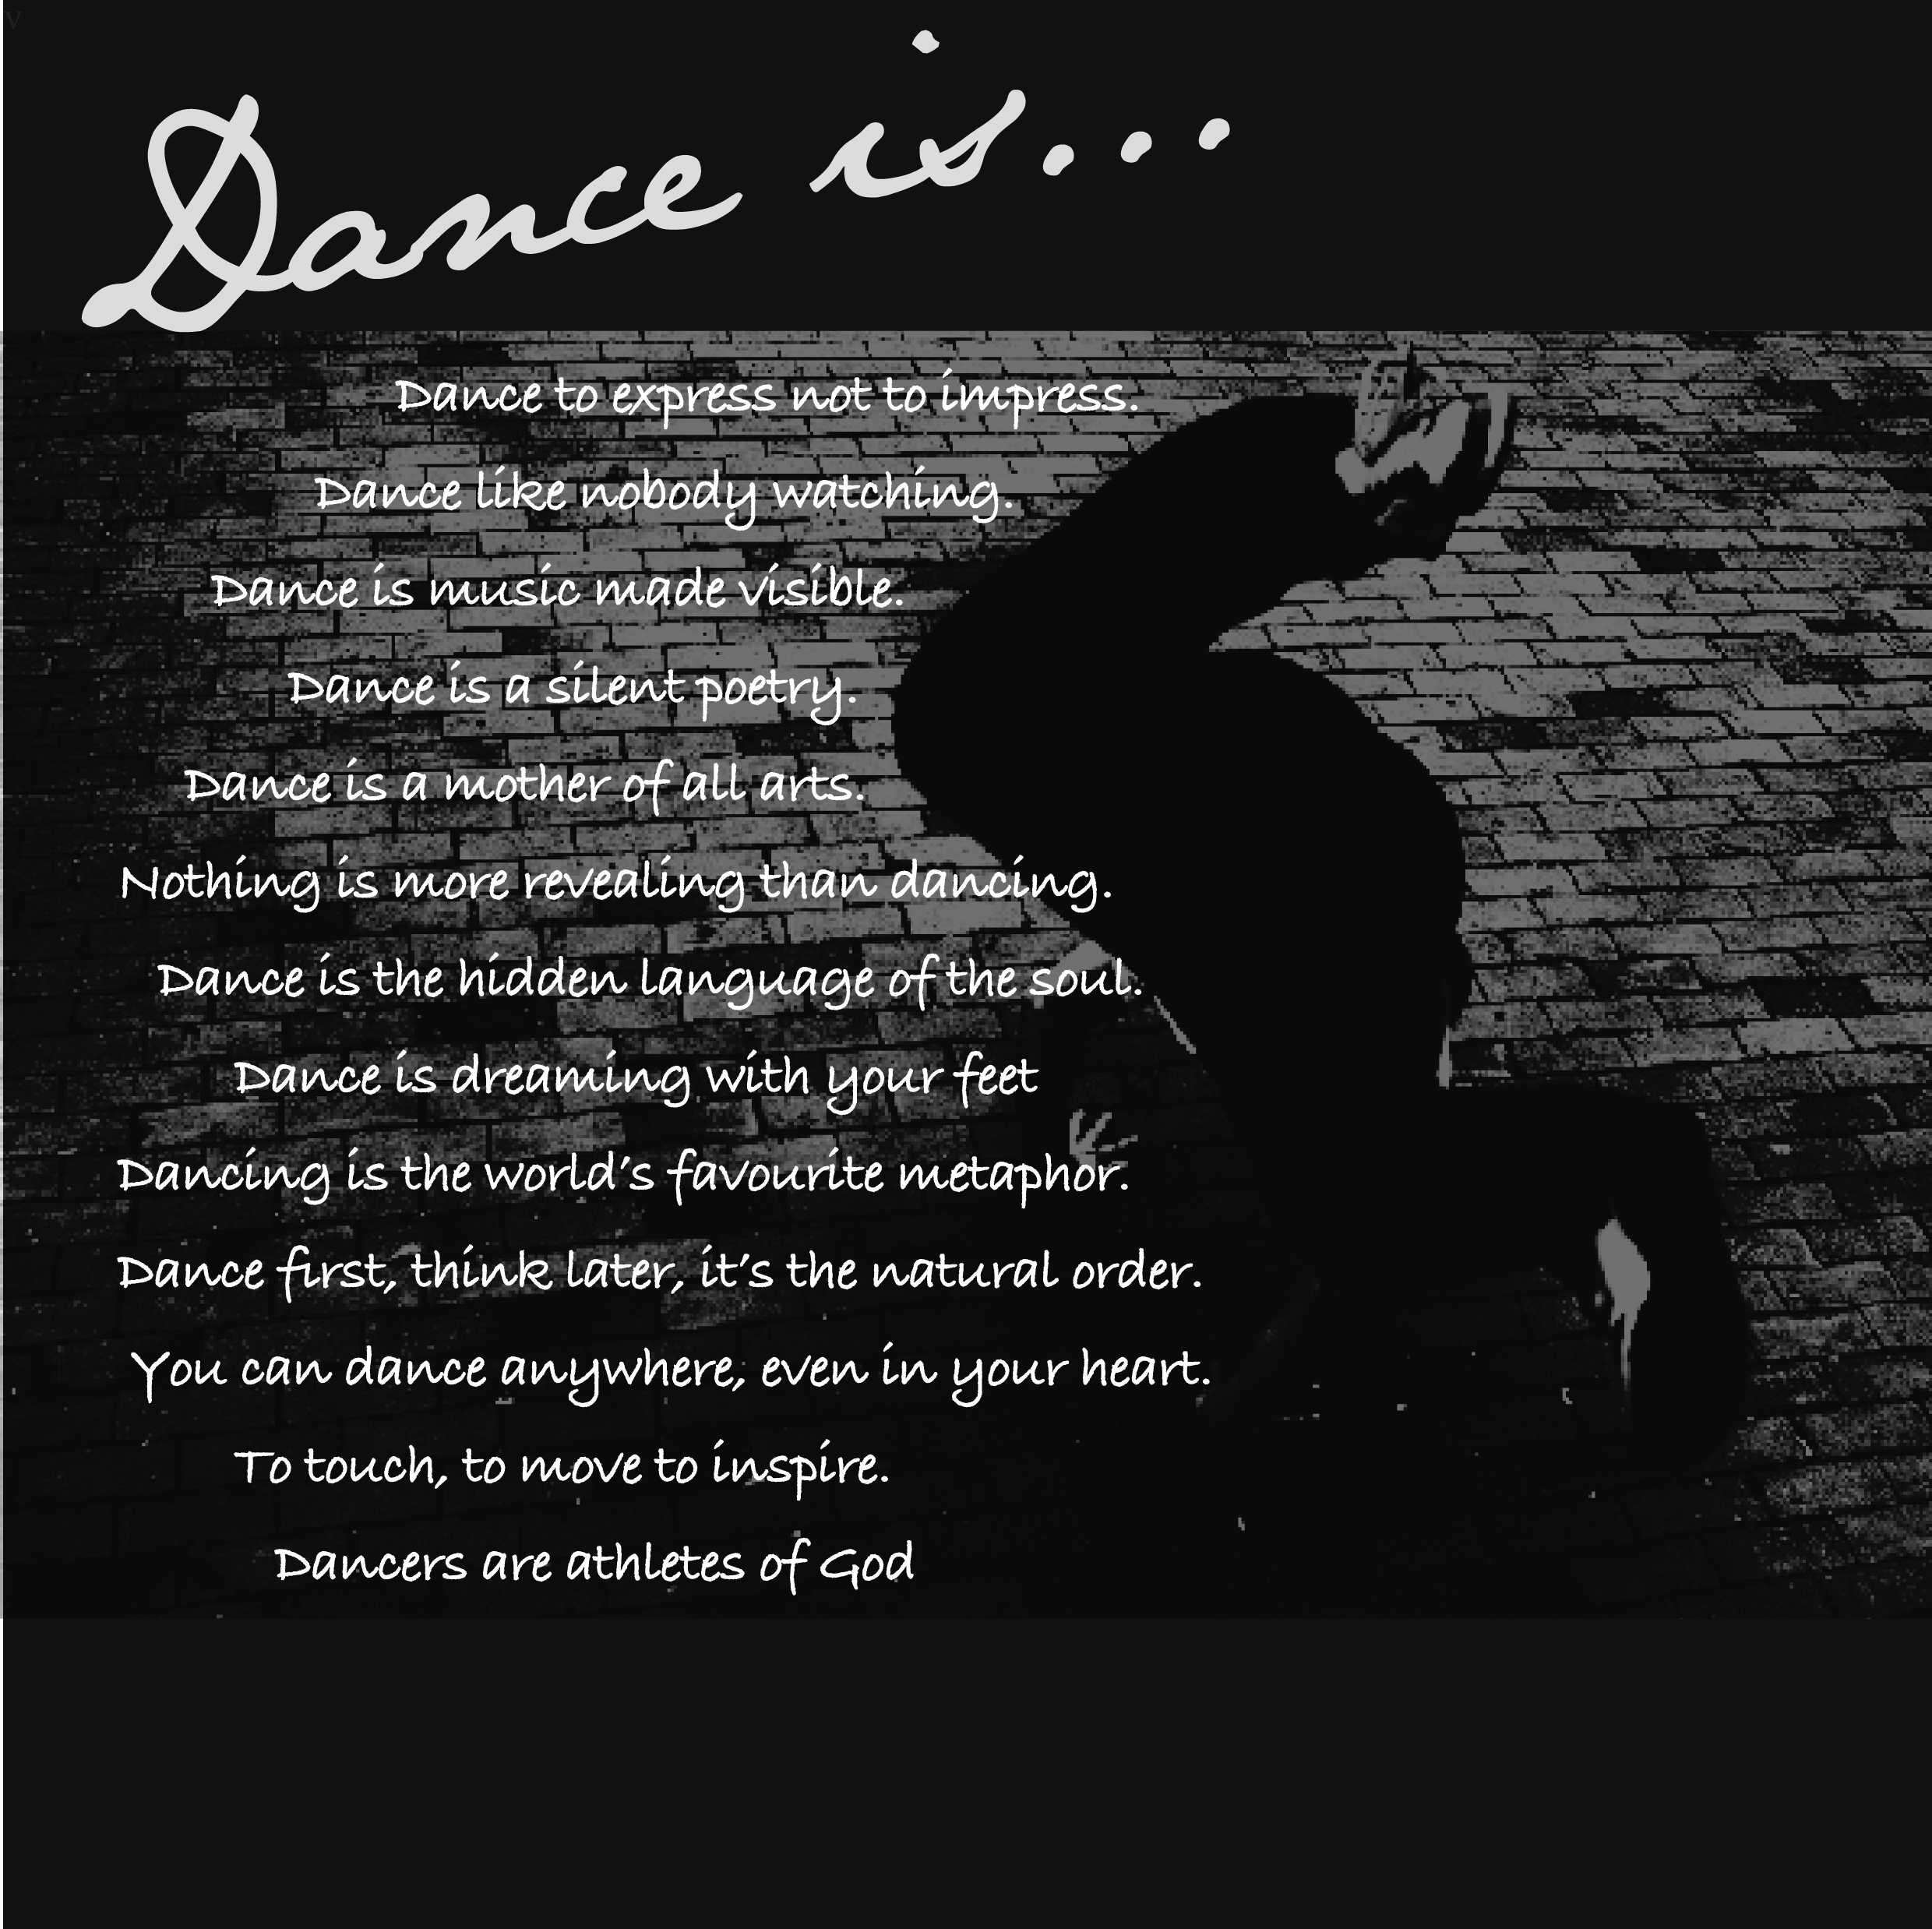 Dancer quote #3